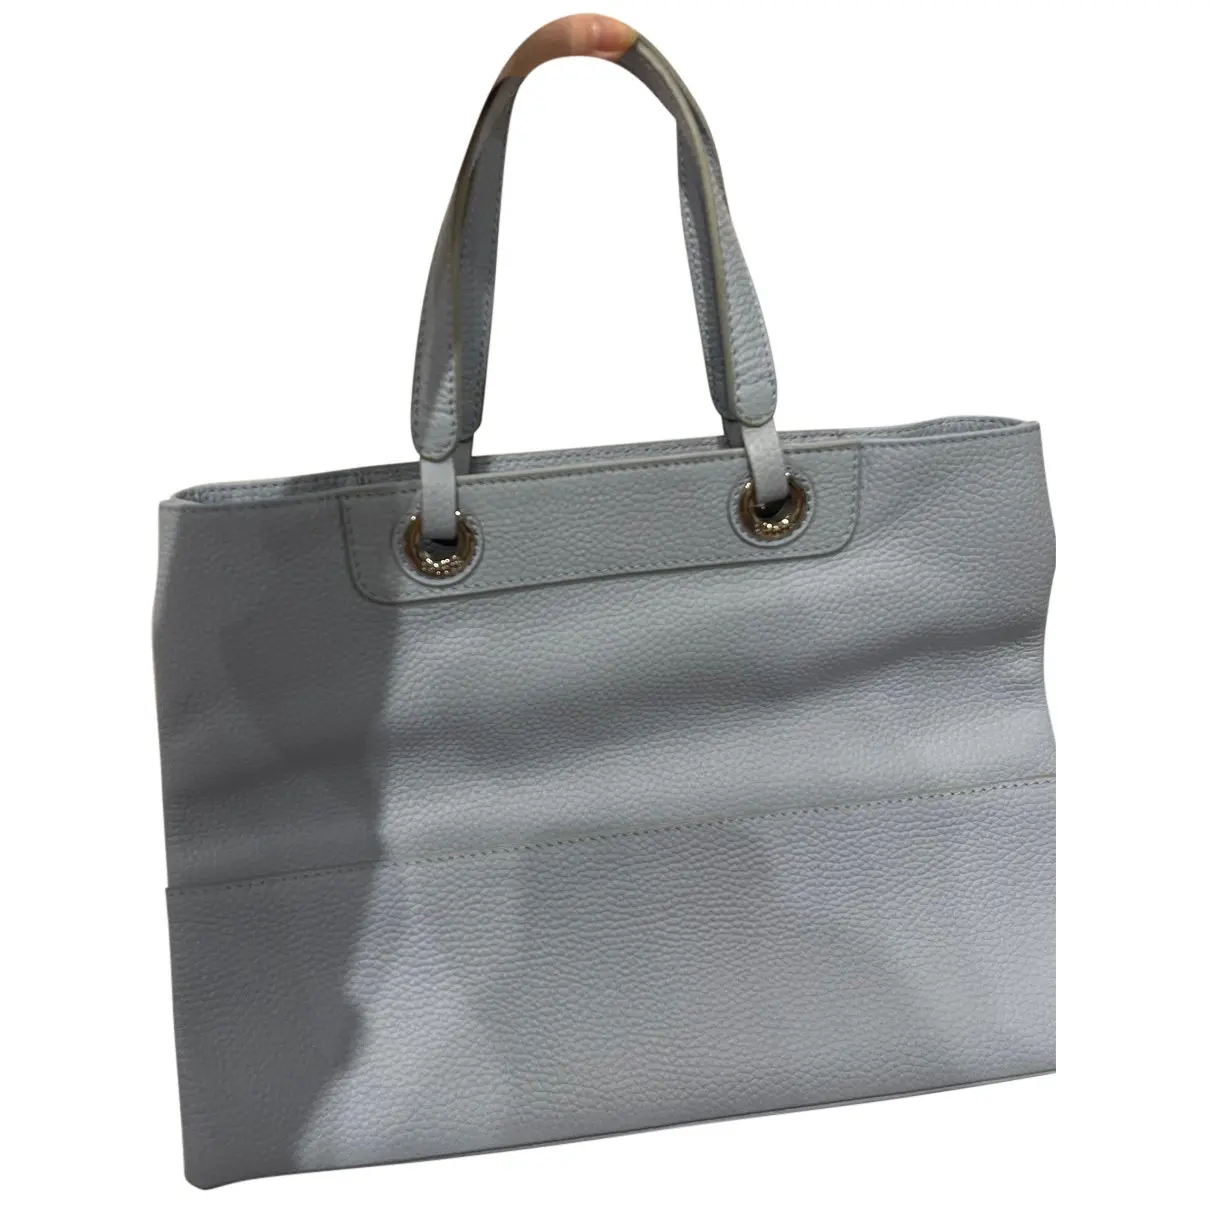 Leather handbag Oroton